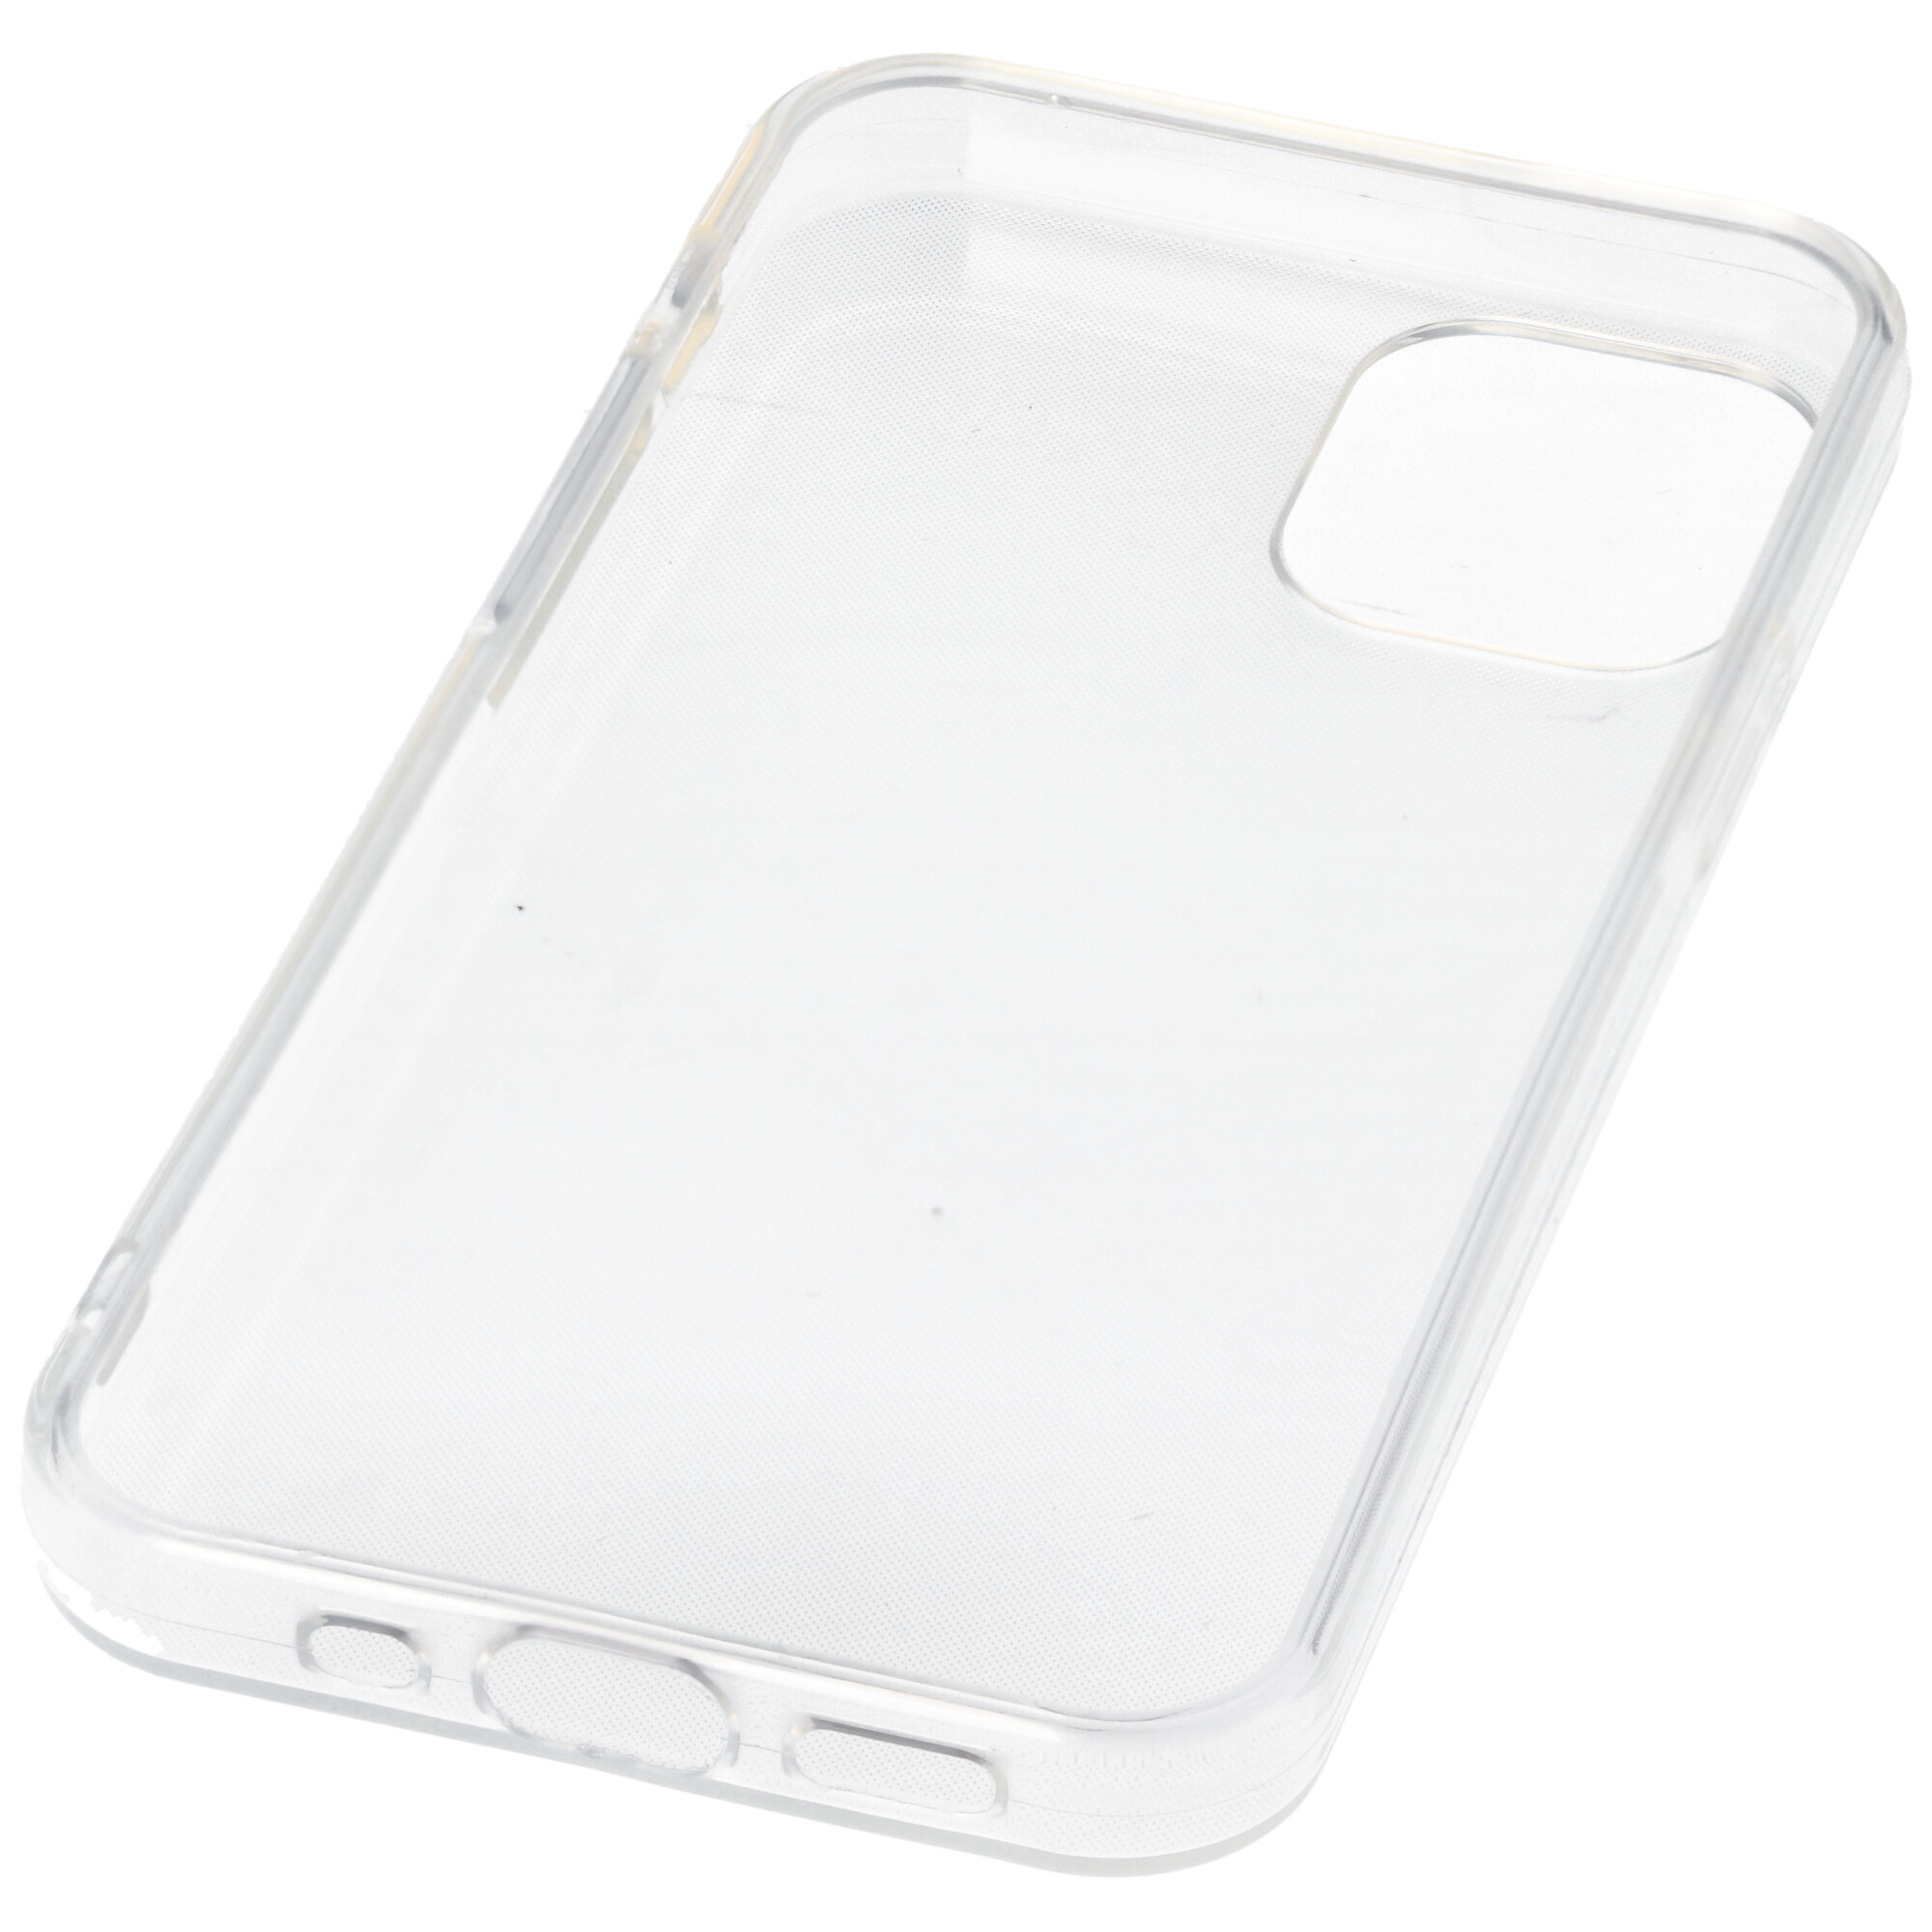 Hülle passend für Apple iPhone 12 Mini 5,4 Zoll - transparente Schutzhülle, Anti-Gelb Luftkissen Fallschutz Silikon Handyhülle robustes TPU Case